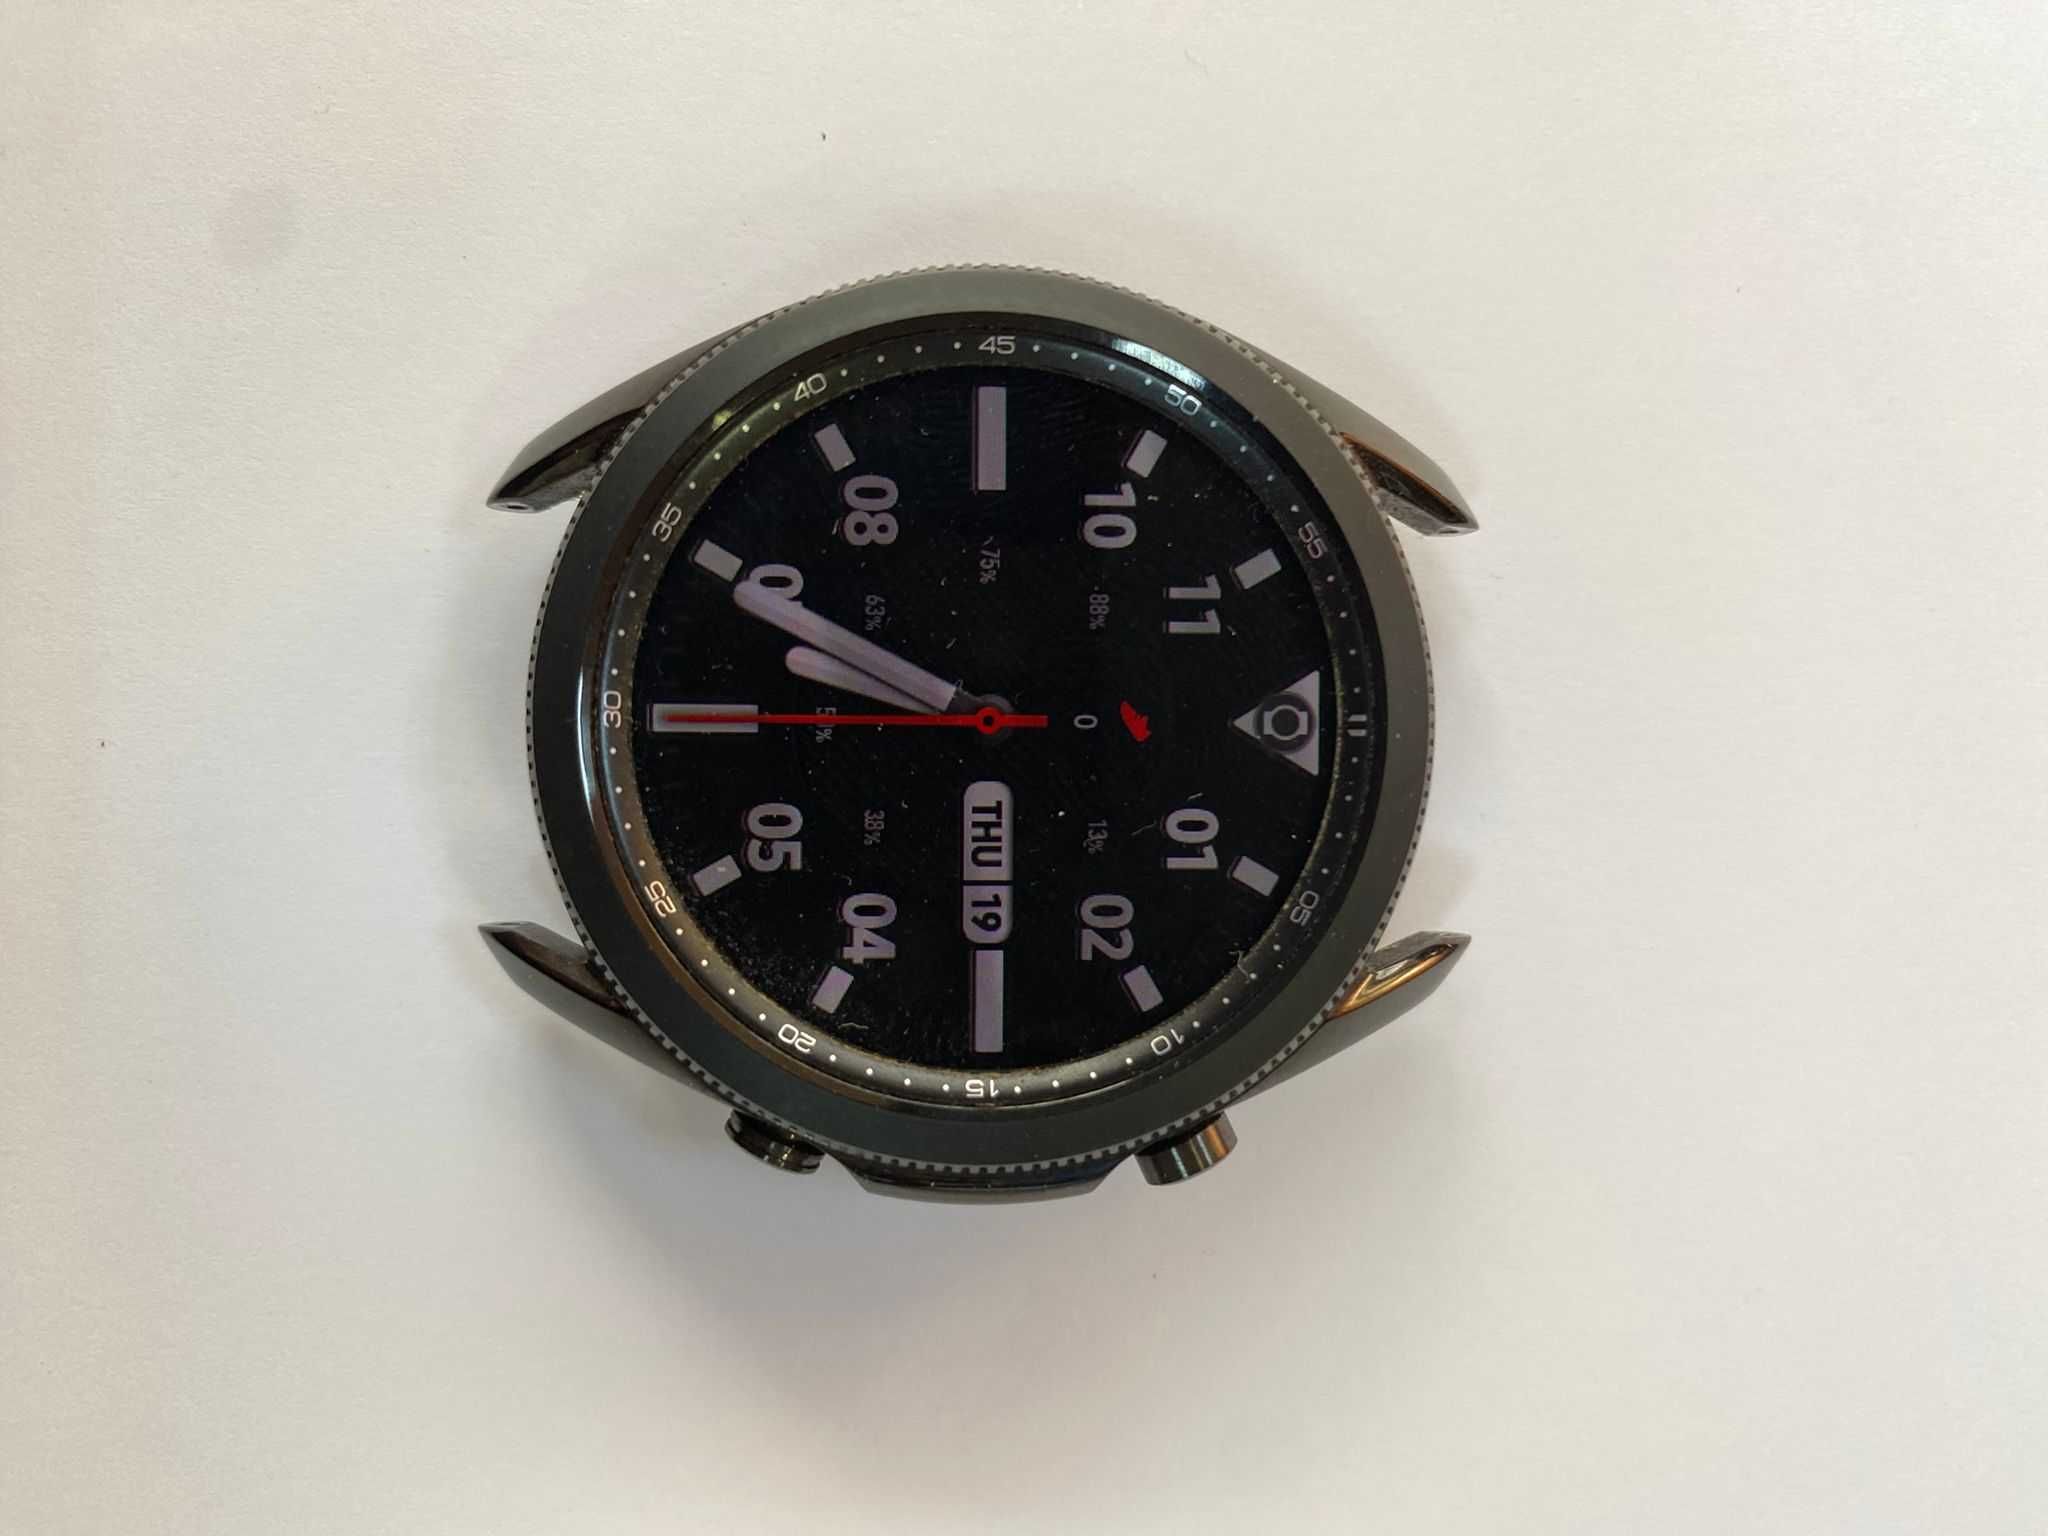 Smartwatch SAMSUNG Galaxy Watch 3 Stainless Steel Poze 100% Reale